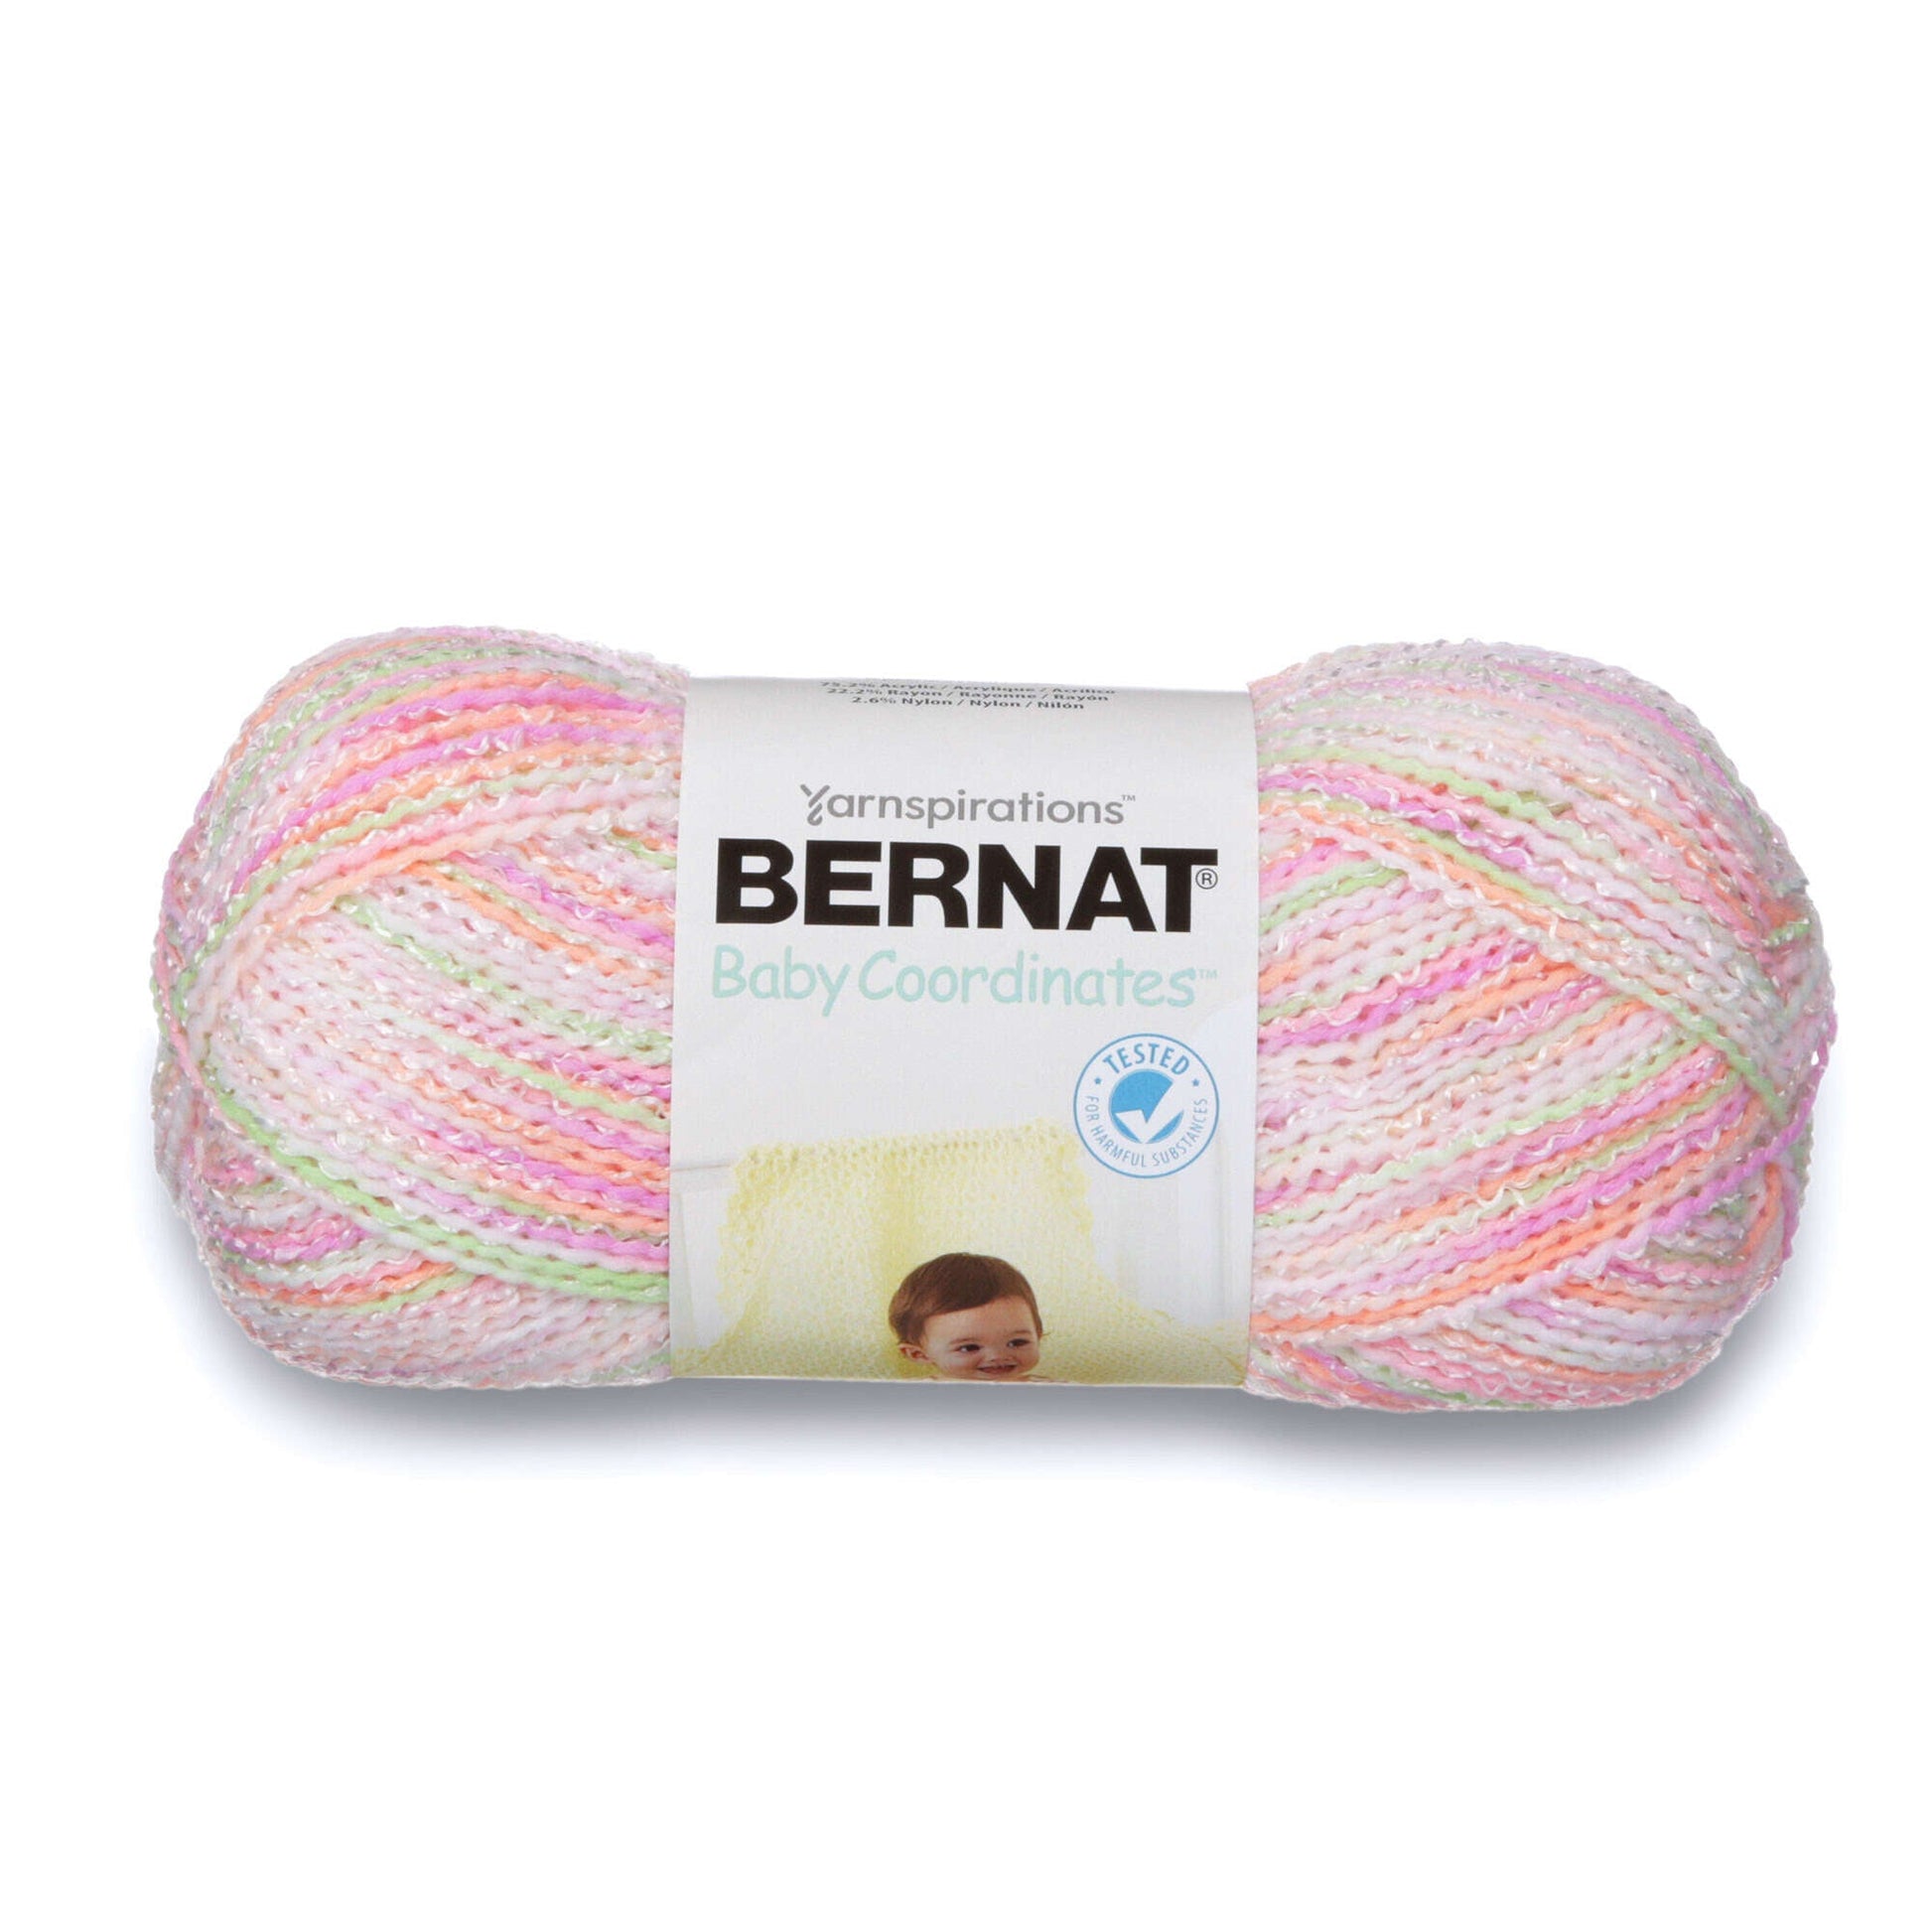 Bernat Baby Coordinates Ombres Yarn - Discontinued shades